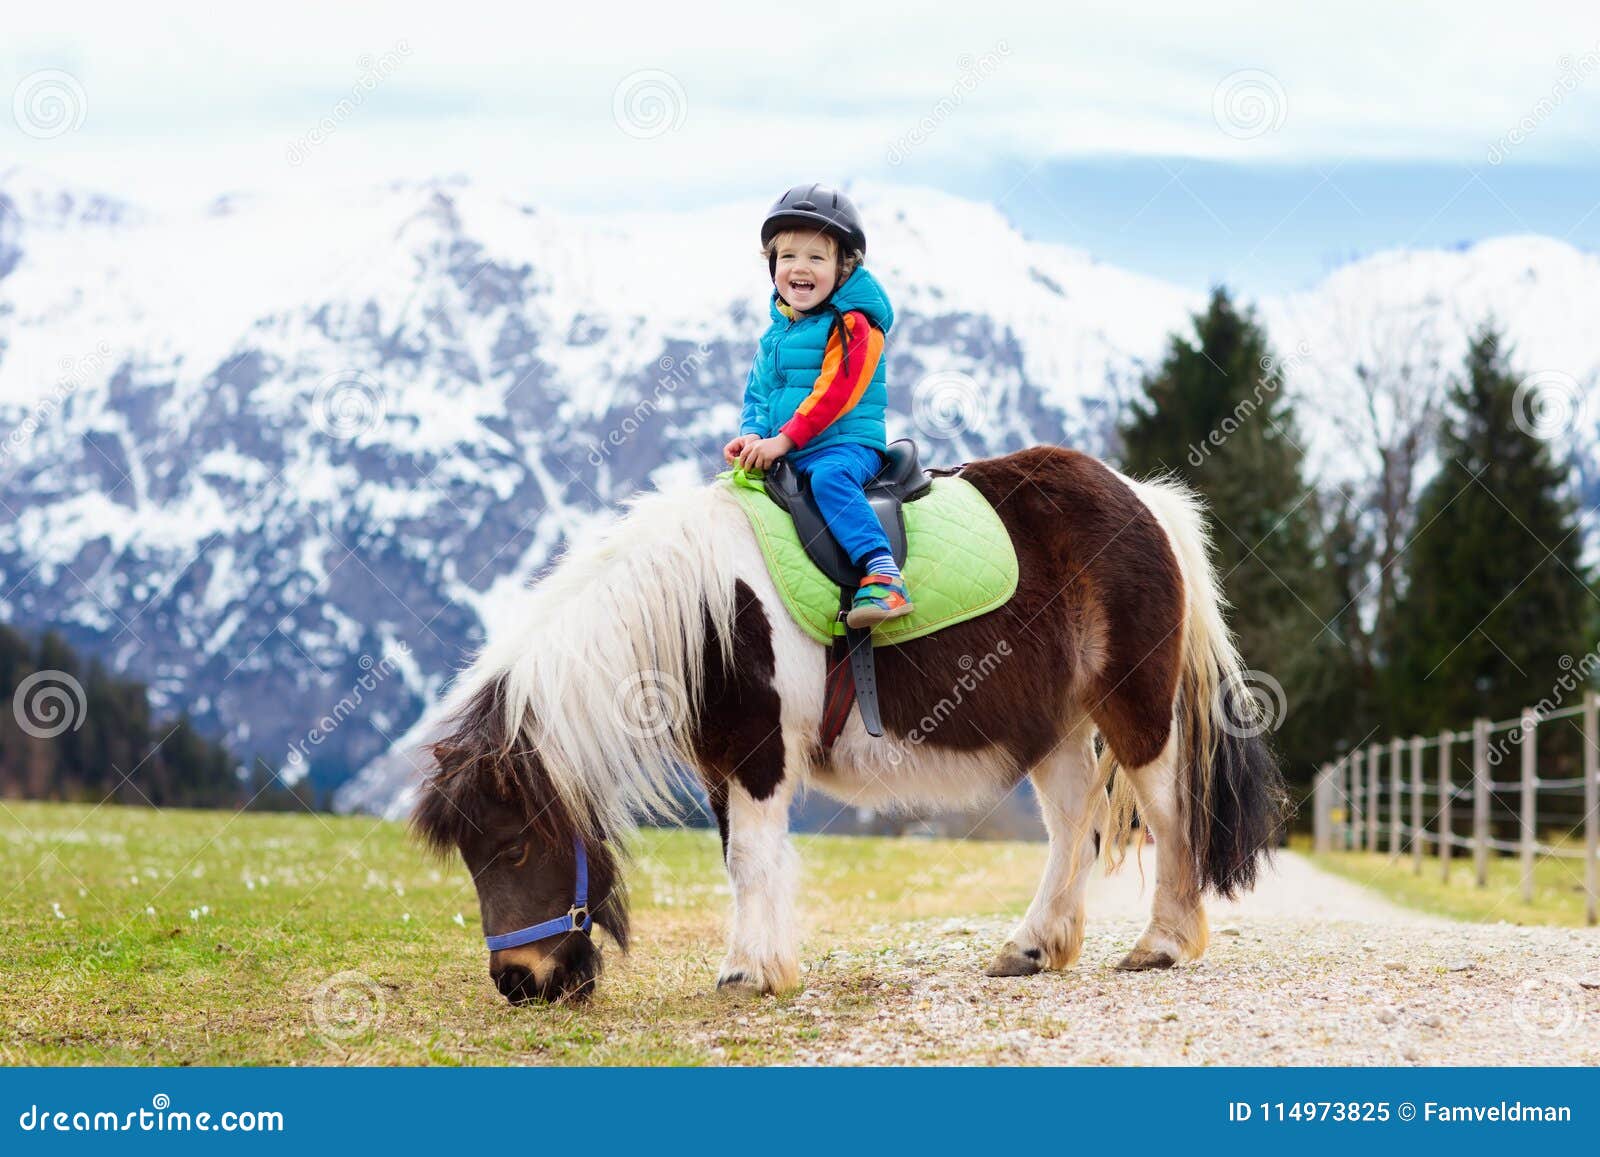 toddler ride on pony